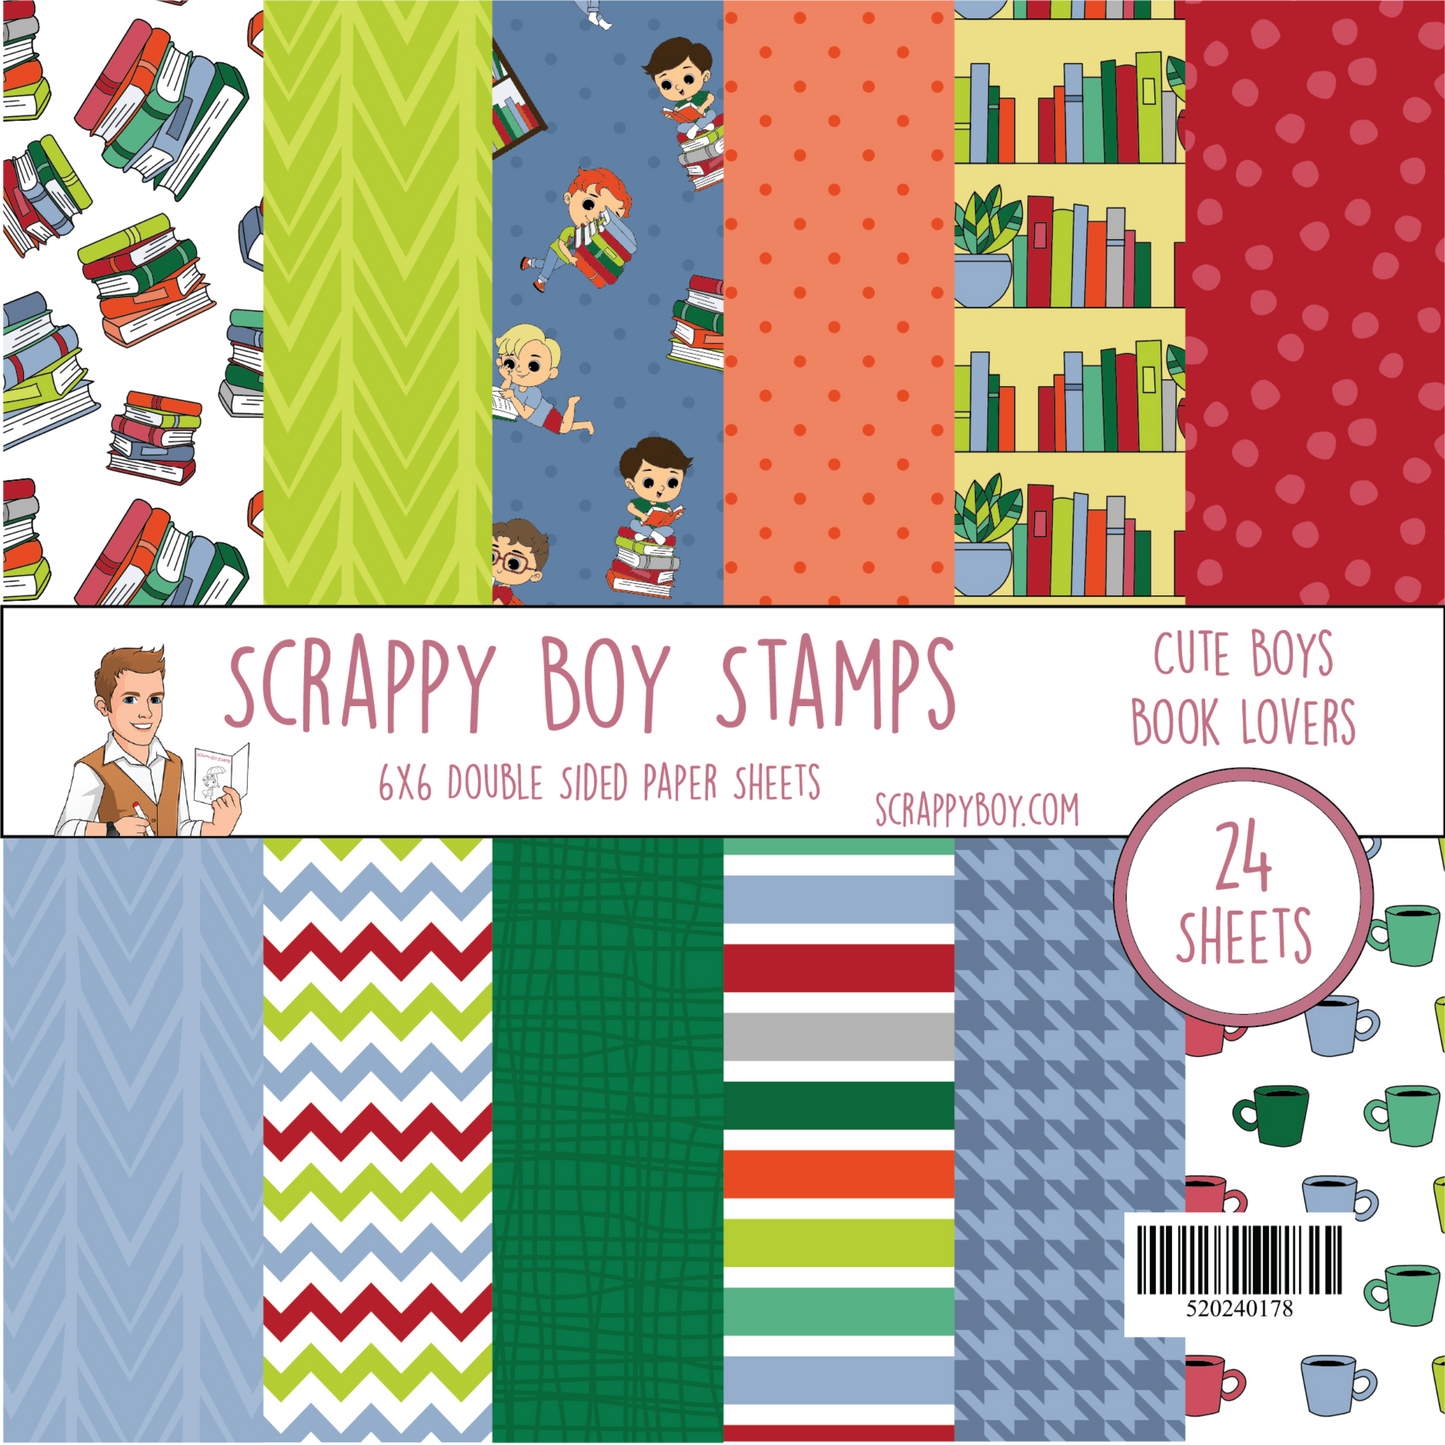 
                  
                    Core Bundle - Cute Boys Book Lovers Release Scrappy Boy Stamps
                  
                